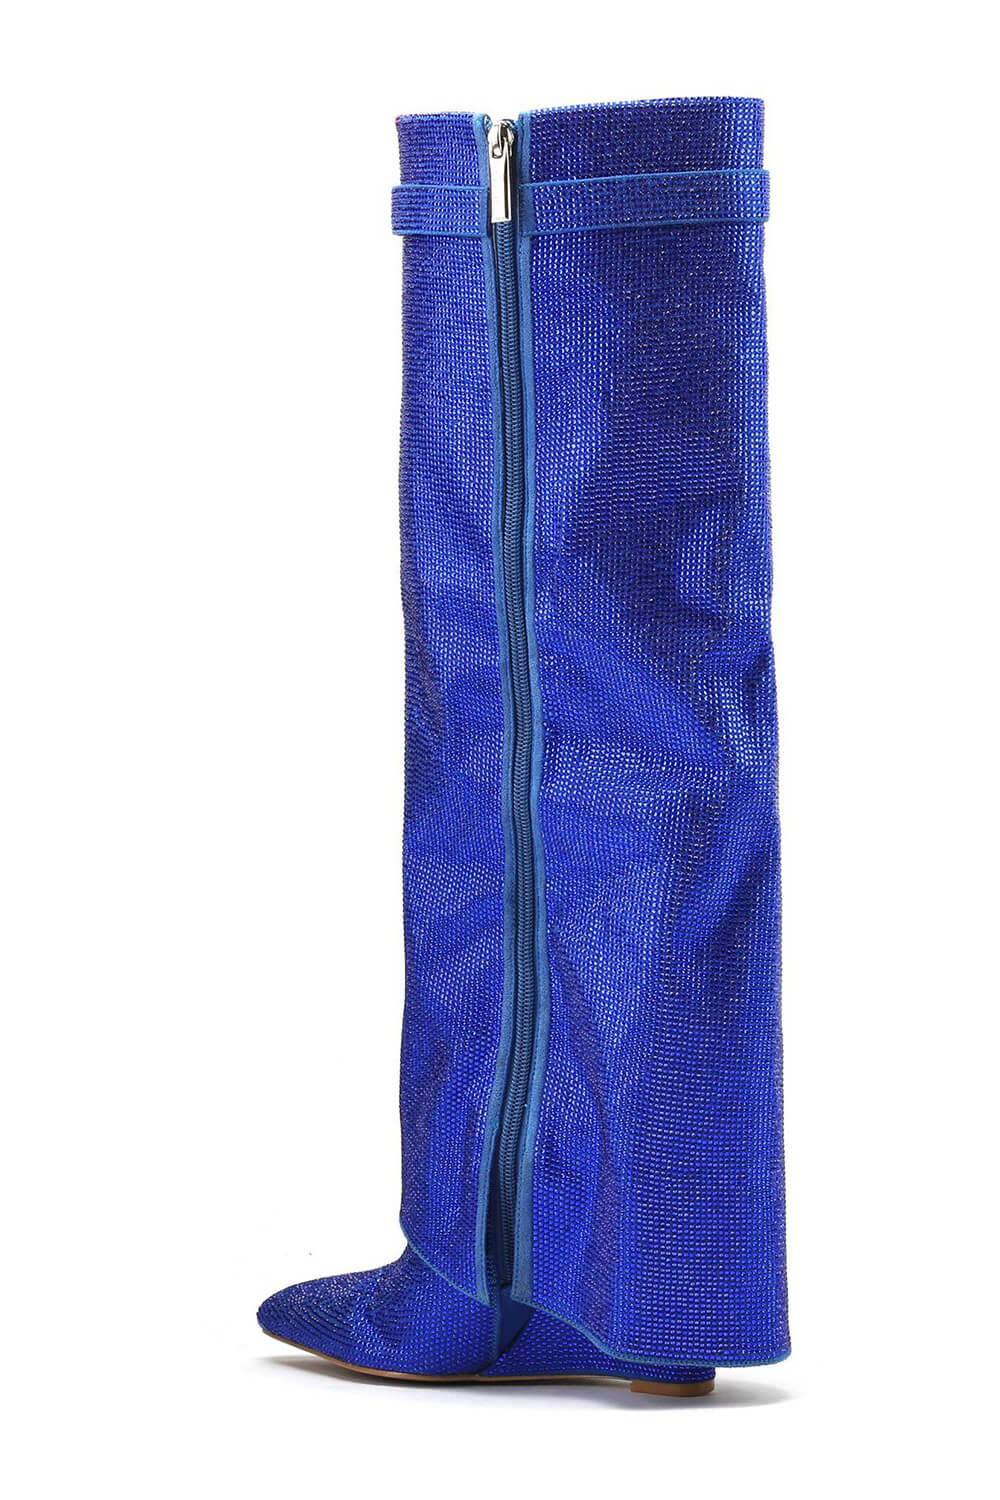 Gem Embellished Diamante Padlock Detail Folded Knee High Wedge Boots - Blue